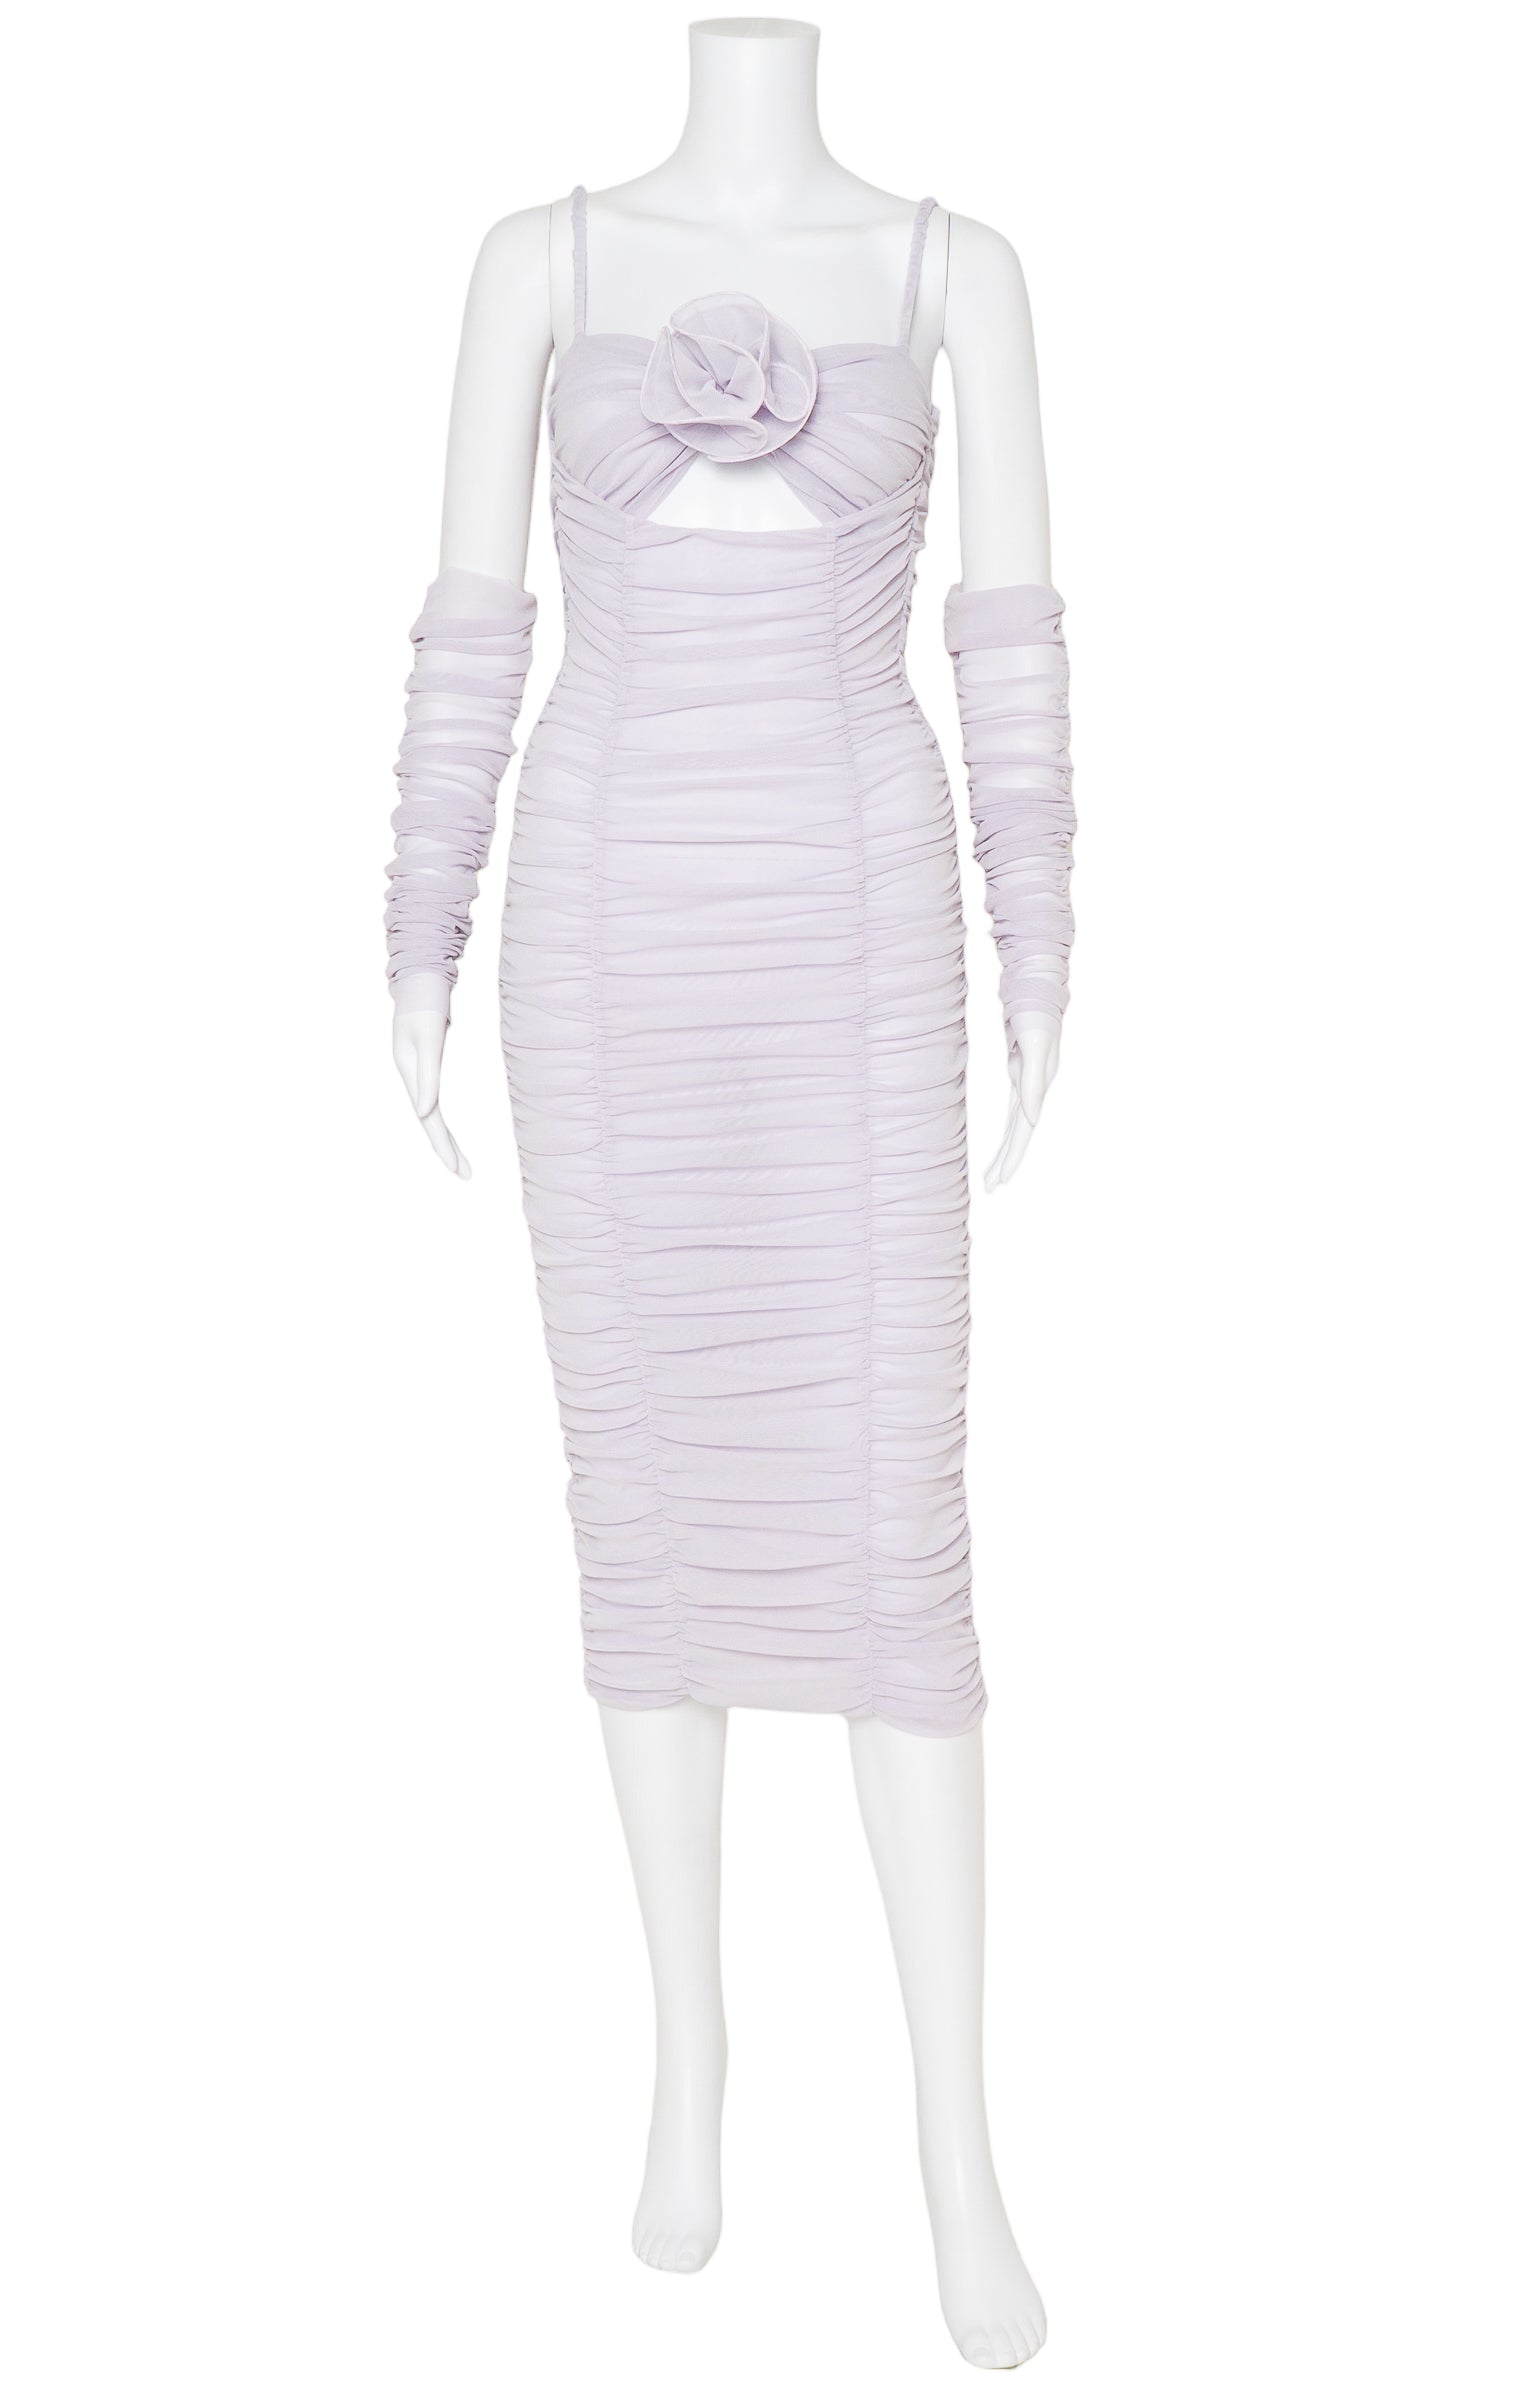 MARIANNA SENCHINA (RARE) Dress & Gloves Set Size: XS